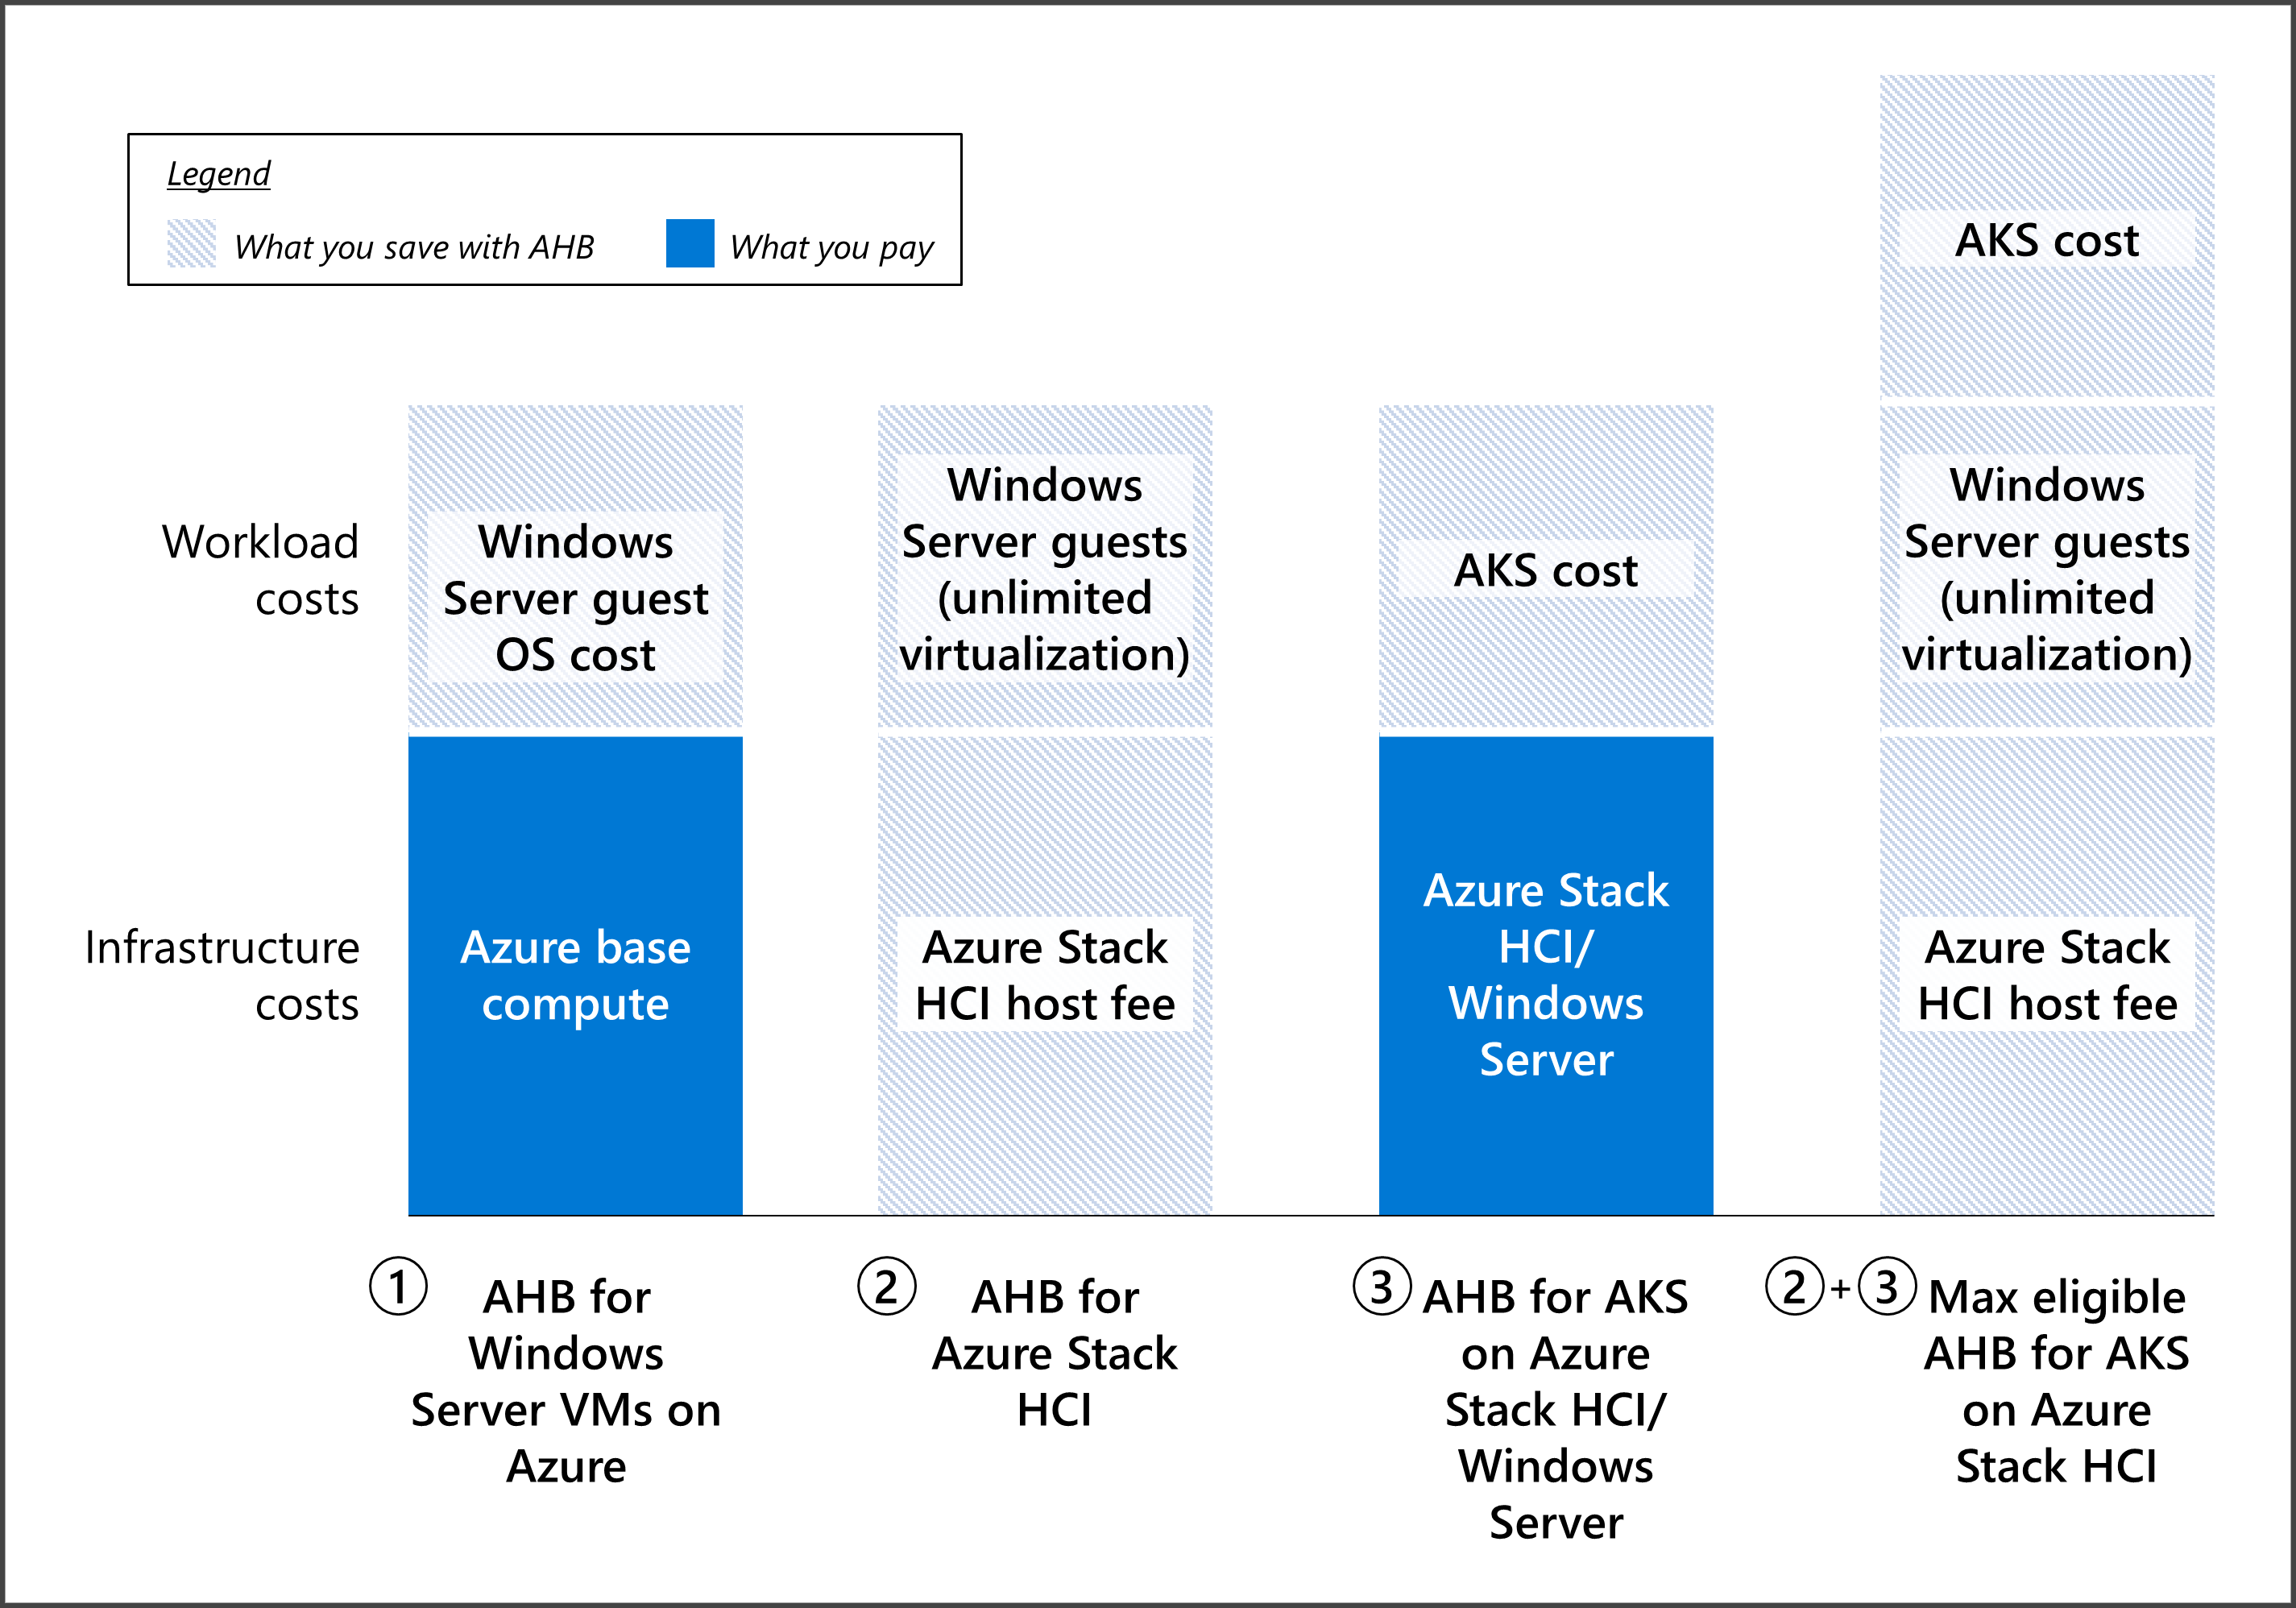 Azure 上の Windows Server VM、AKS on Azure Stack HCI、Windows Server における Azure ハイブリッド特典のコスト削減効果を示す図。